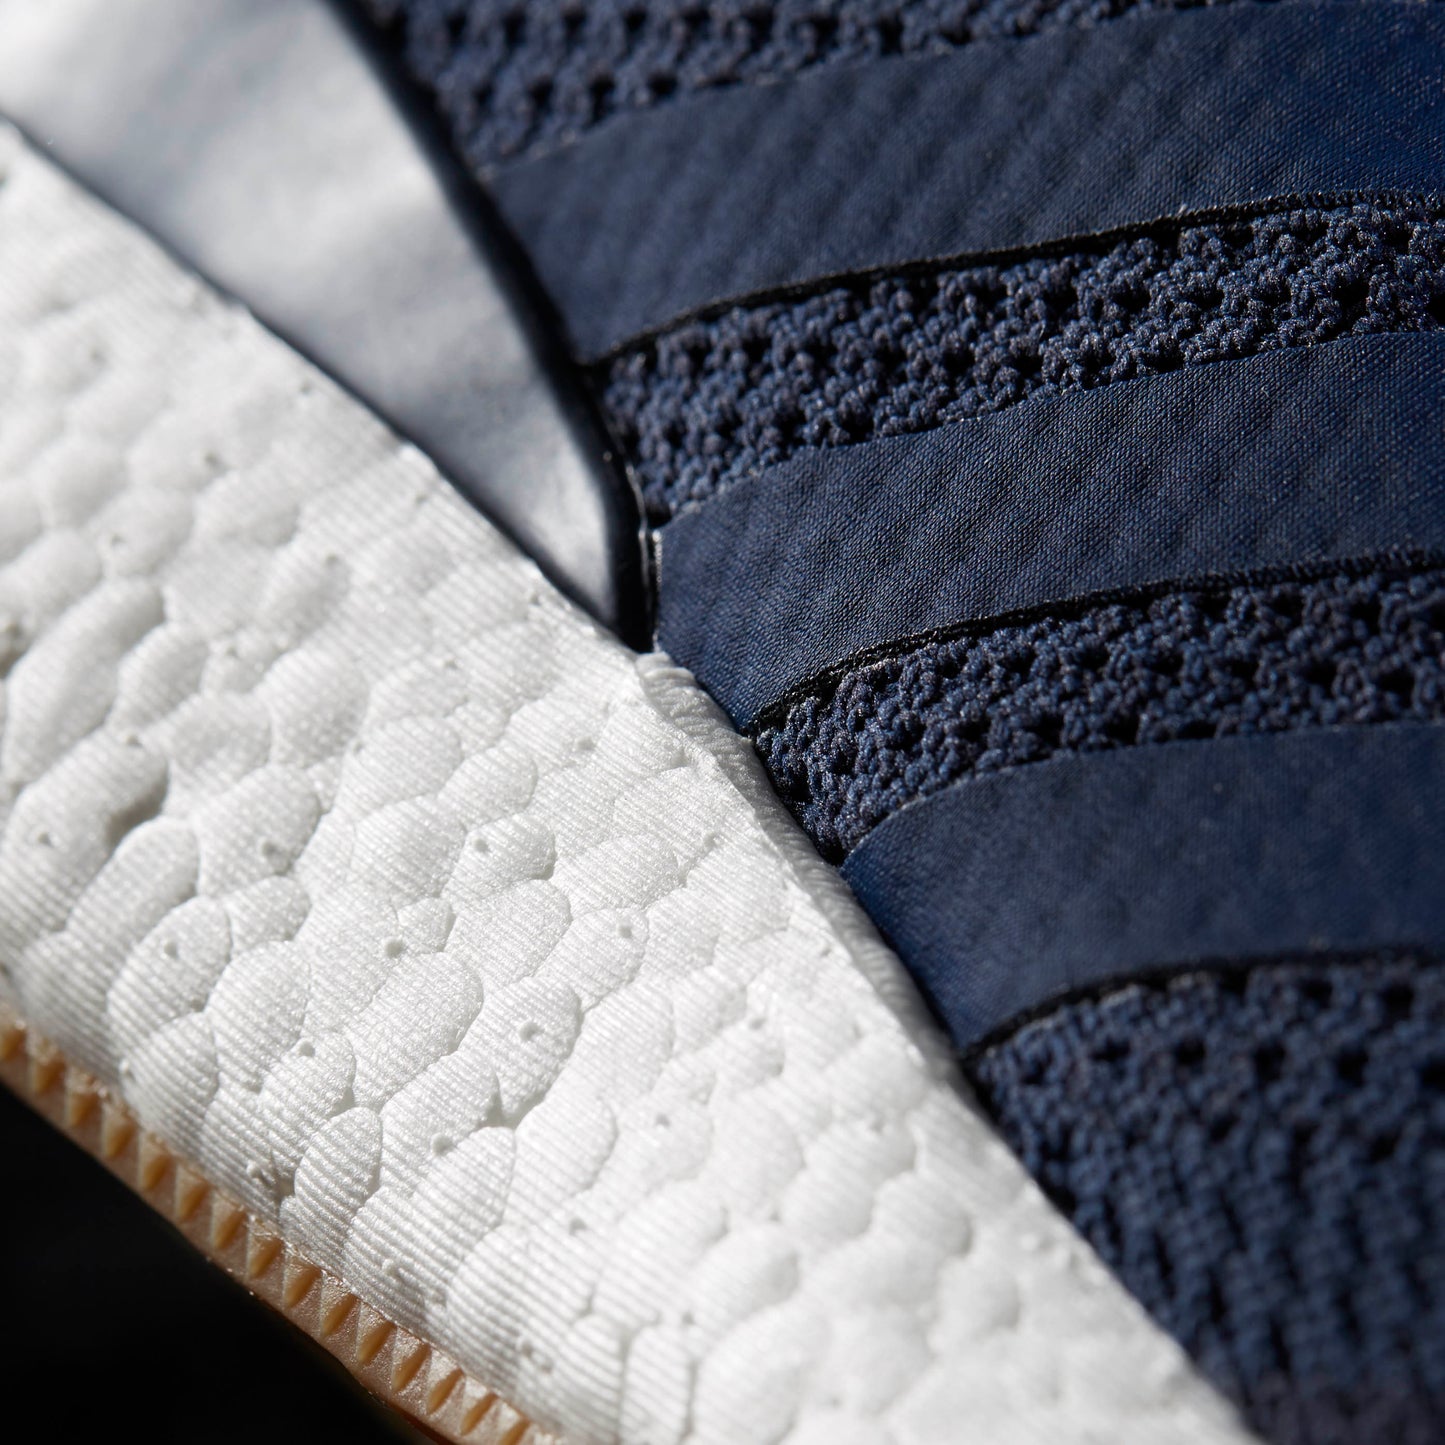 adidas Originals BUSENITZ PURE BOOST Primeknit Shoes - Collegiate Navy | Men's